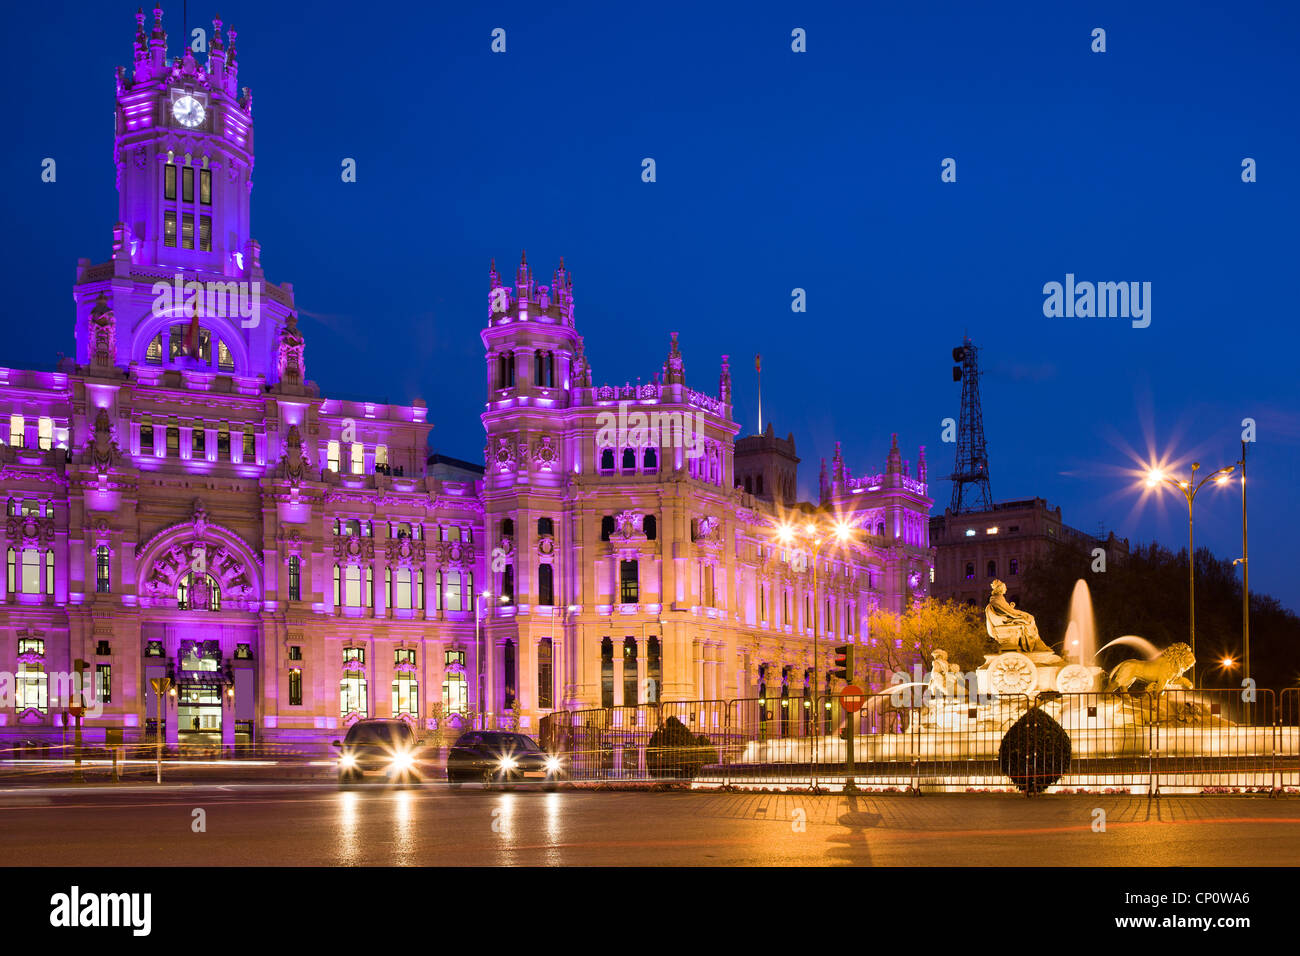 Palacio de Comunicaciones and the Cibeles Fountain on Plaza de Cibeles illuminated at night in the city of Madrid, Spain Stock Photo